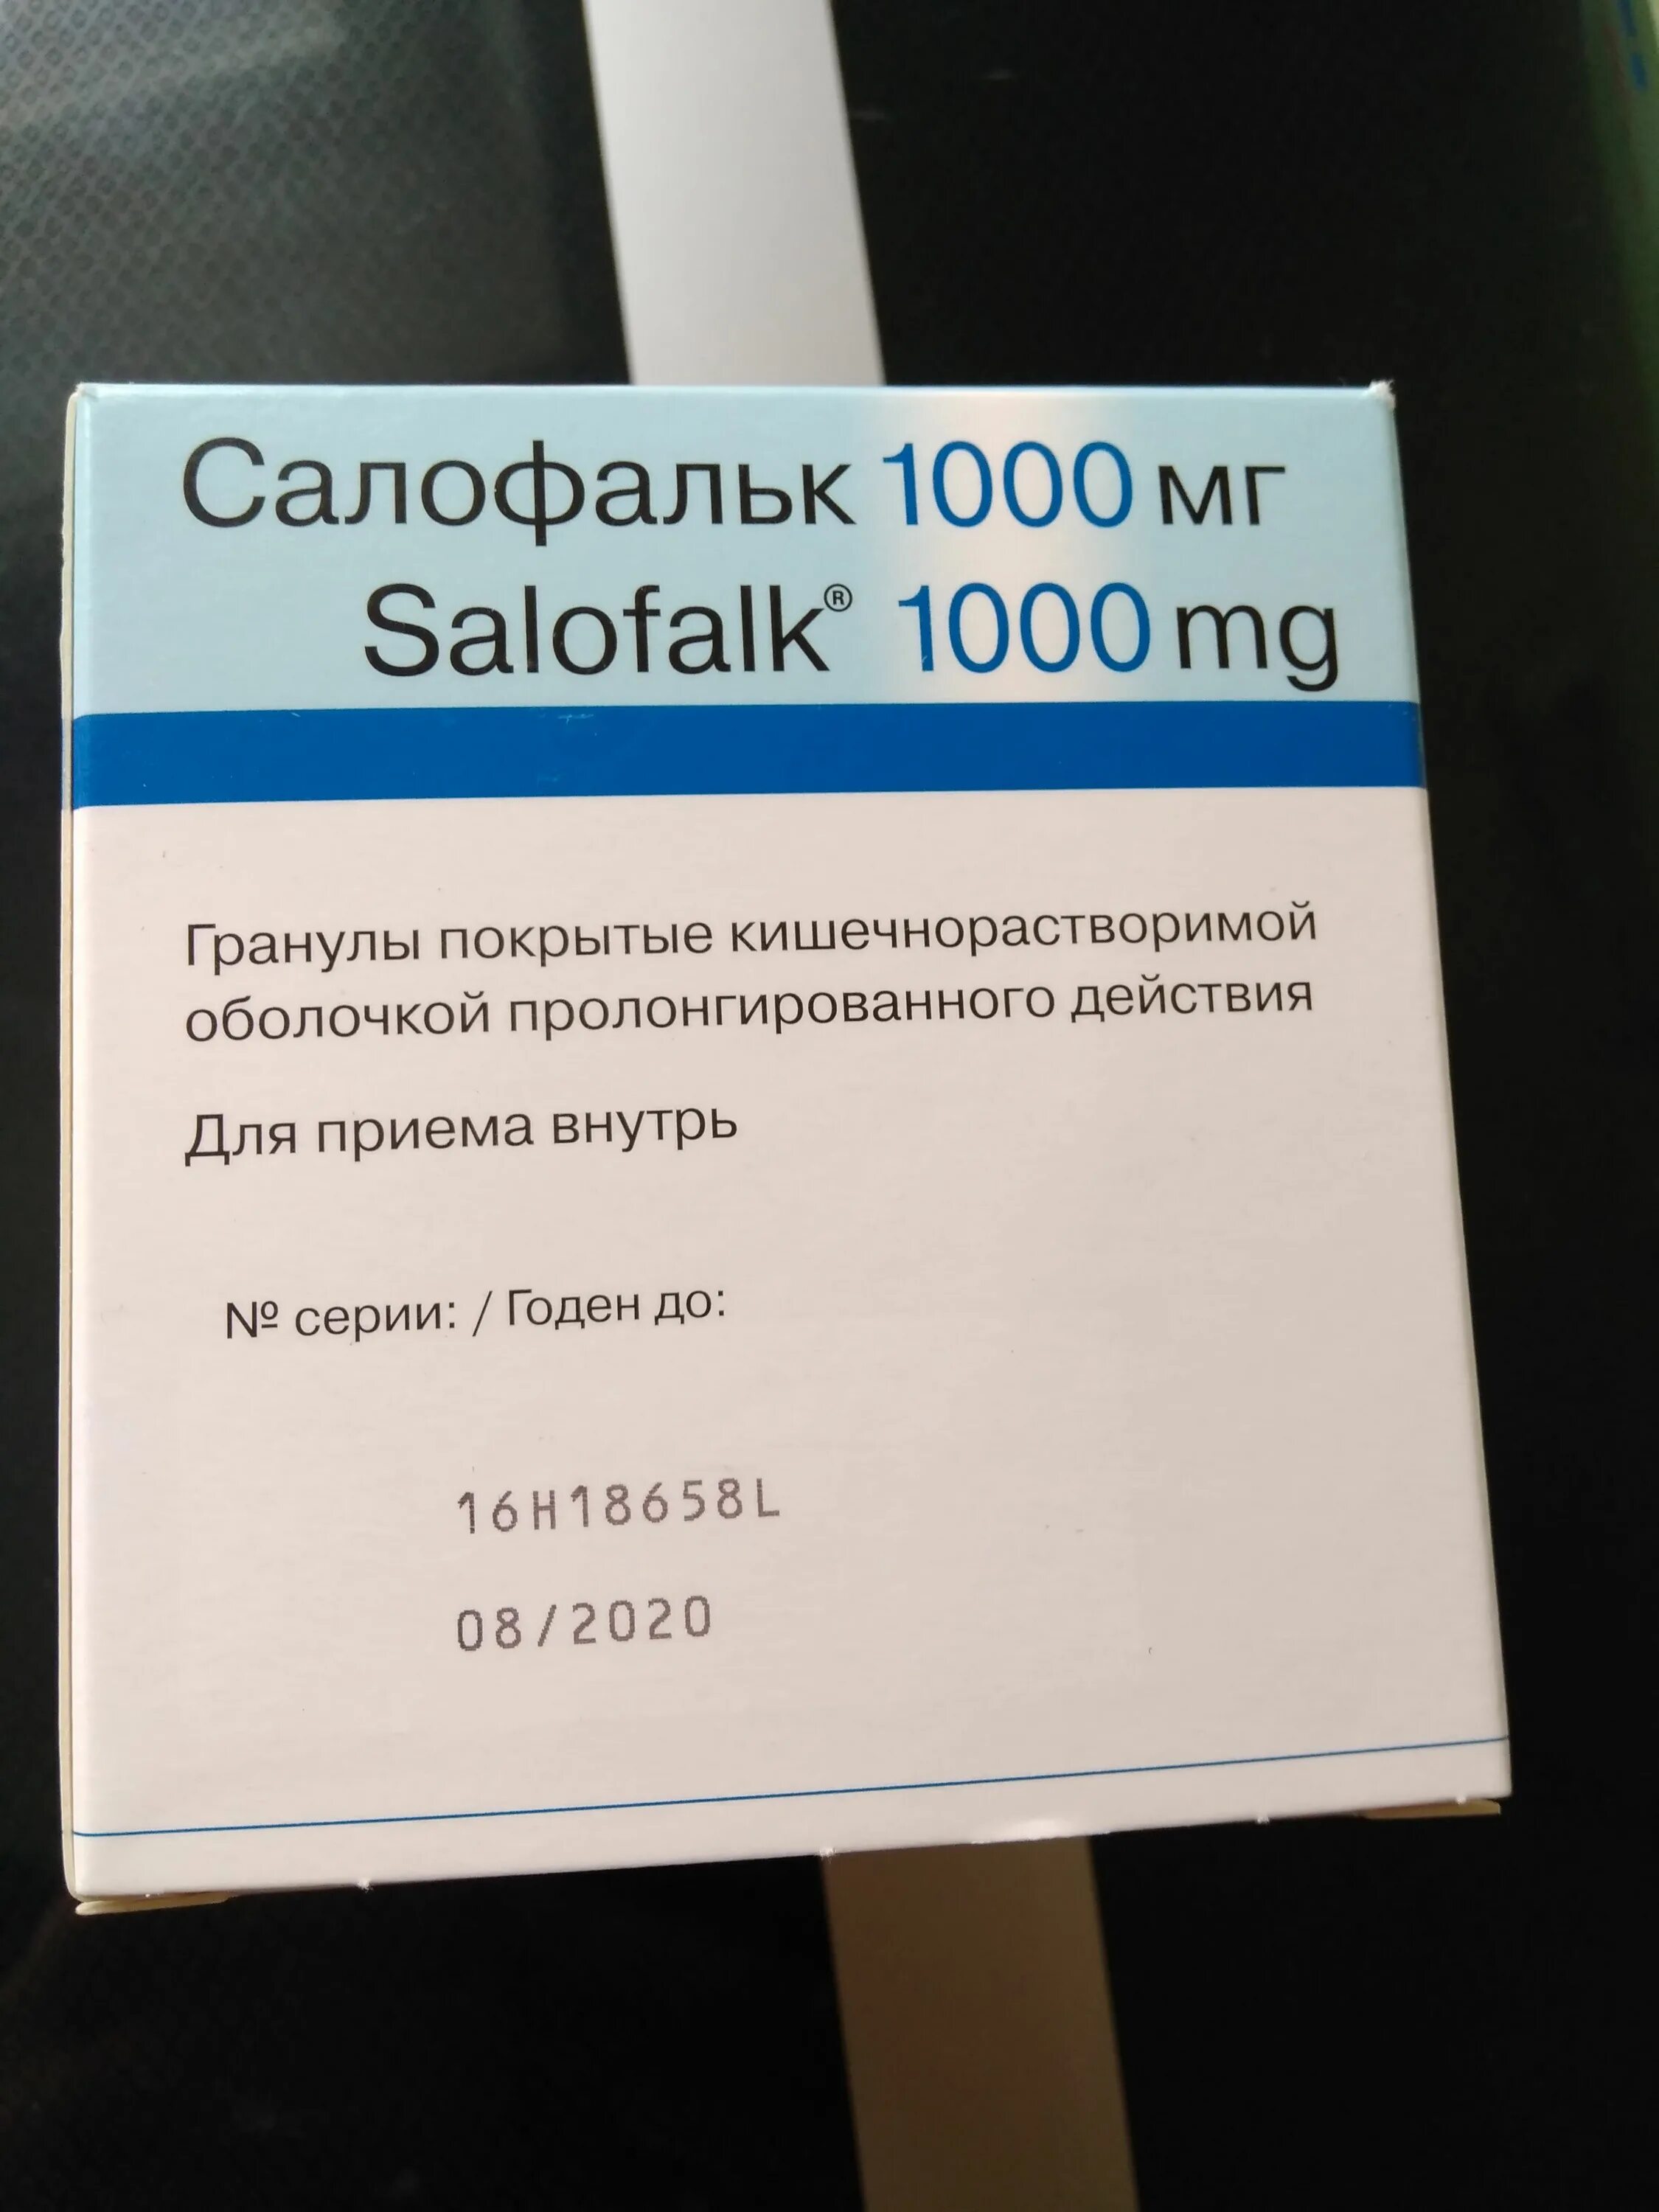 Салофальк гранулы 1000. Салофальк 1000 мг. Salofalk 1000мг гранулы. Салофальк 1000 мг таблетки.